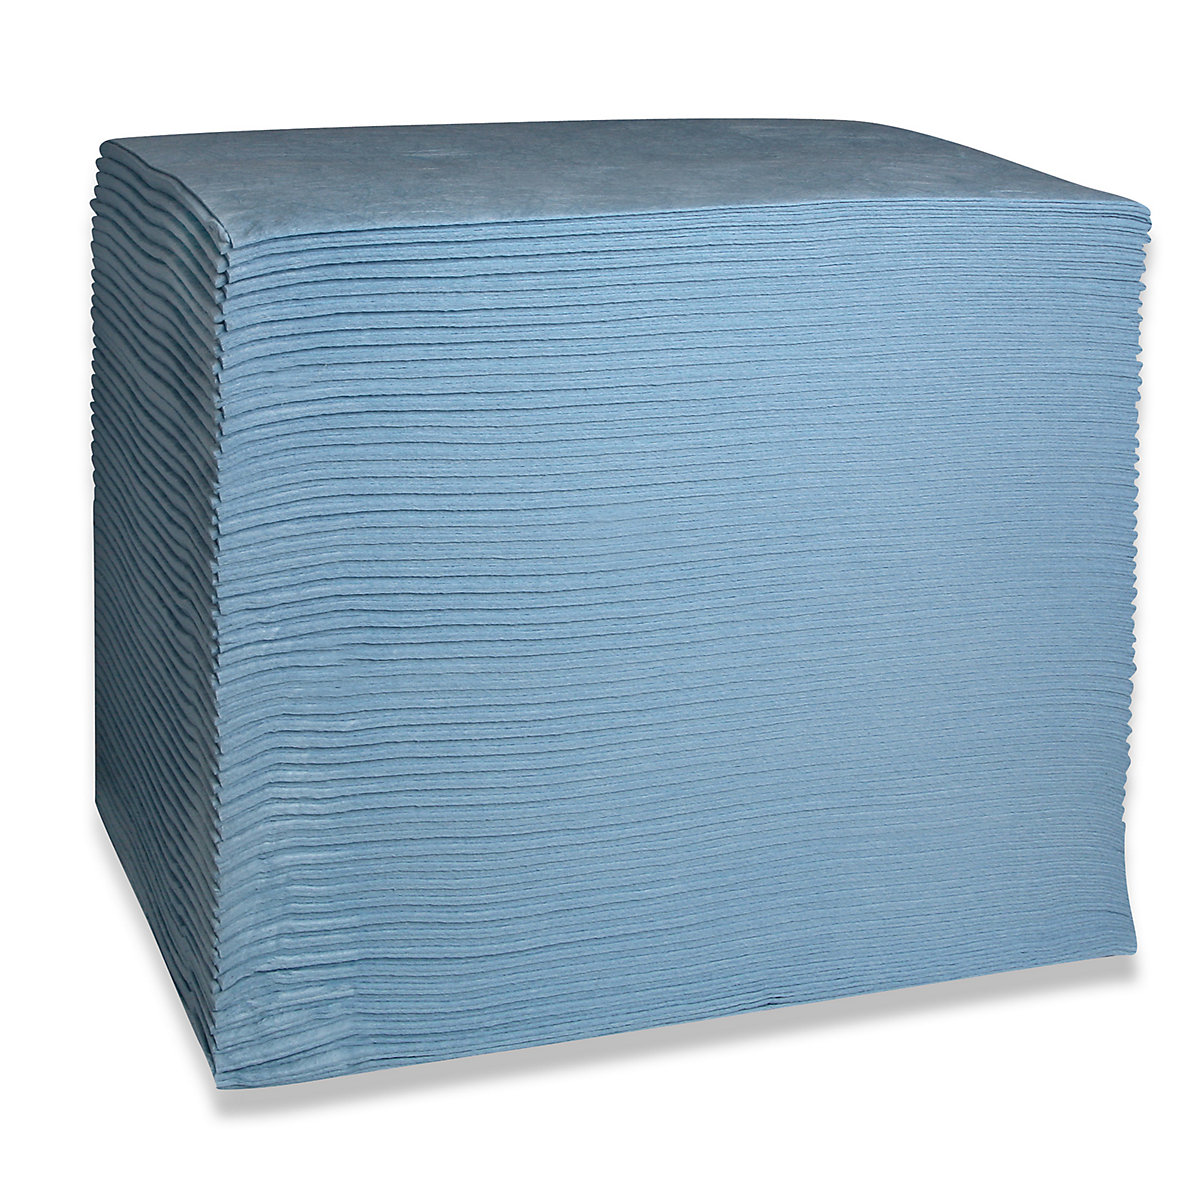 Feuille absorbante FIRST, feuilles serviettes, version medium, pour huile, 500 x 400 mm, bleu, lot de 200-13